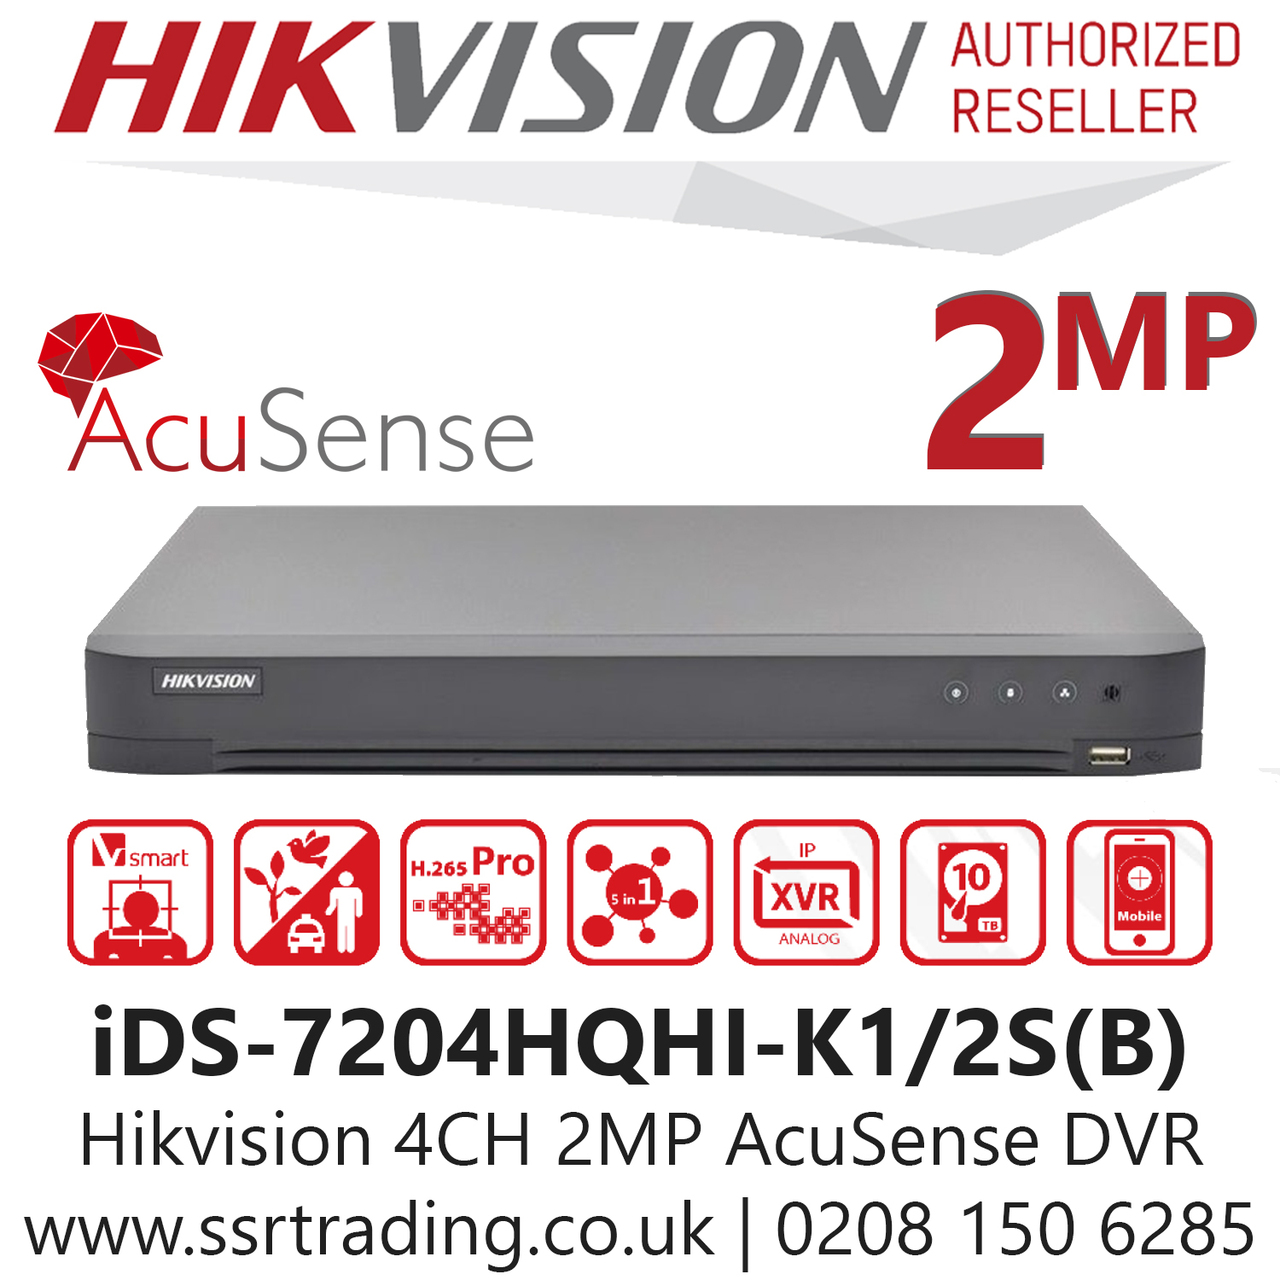 ids-7204hqhi-k1-hikvision-4ch-2mp-dvr-acusense-www.ssrtrading.co.uk-0208-150-6285-27378.1613040682.1280.1280.jpg